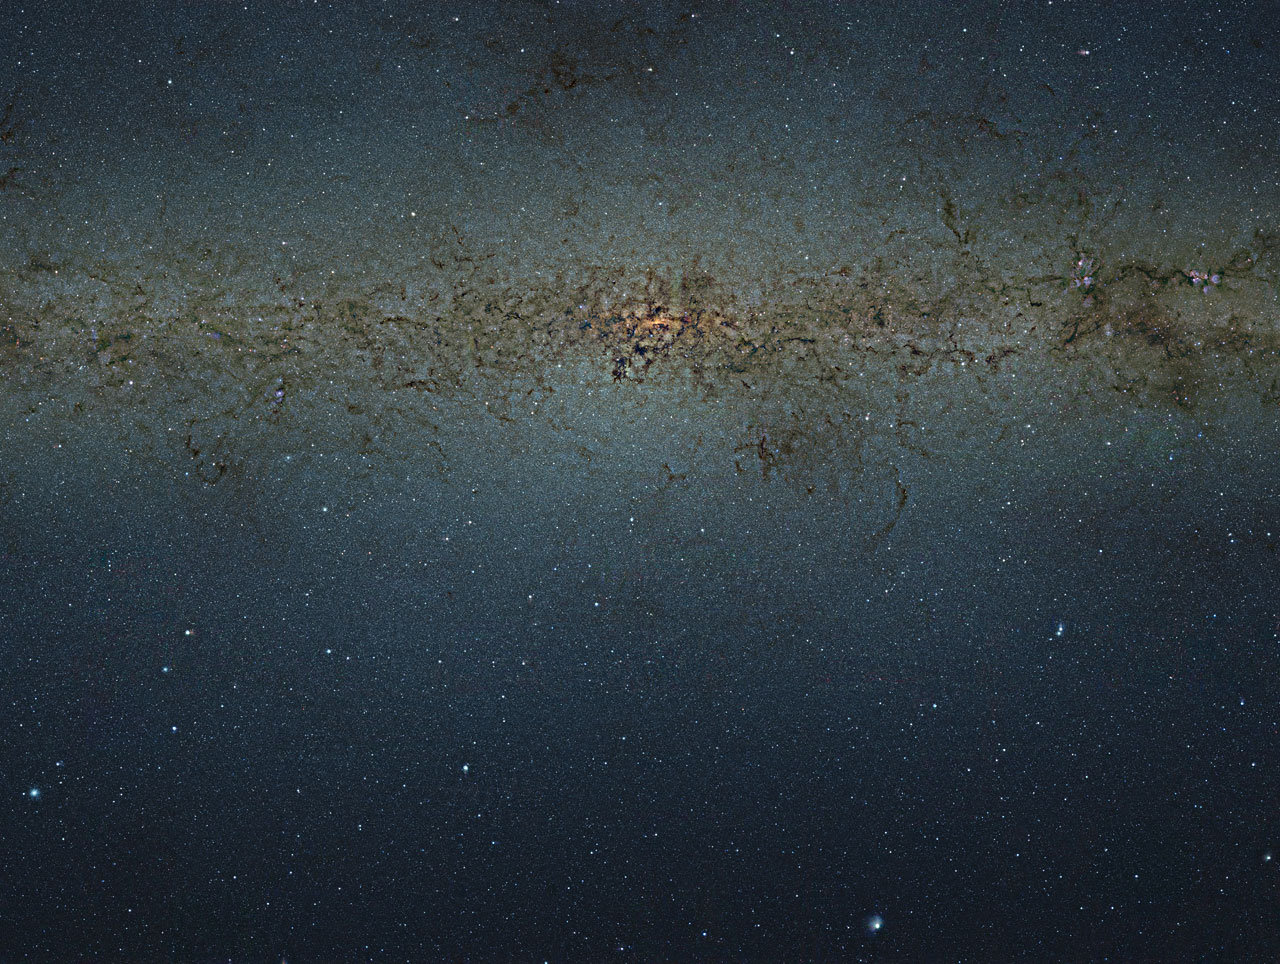 Simply Amazing Image : 84 Million Stars